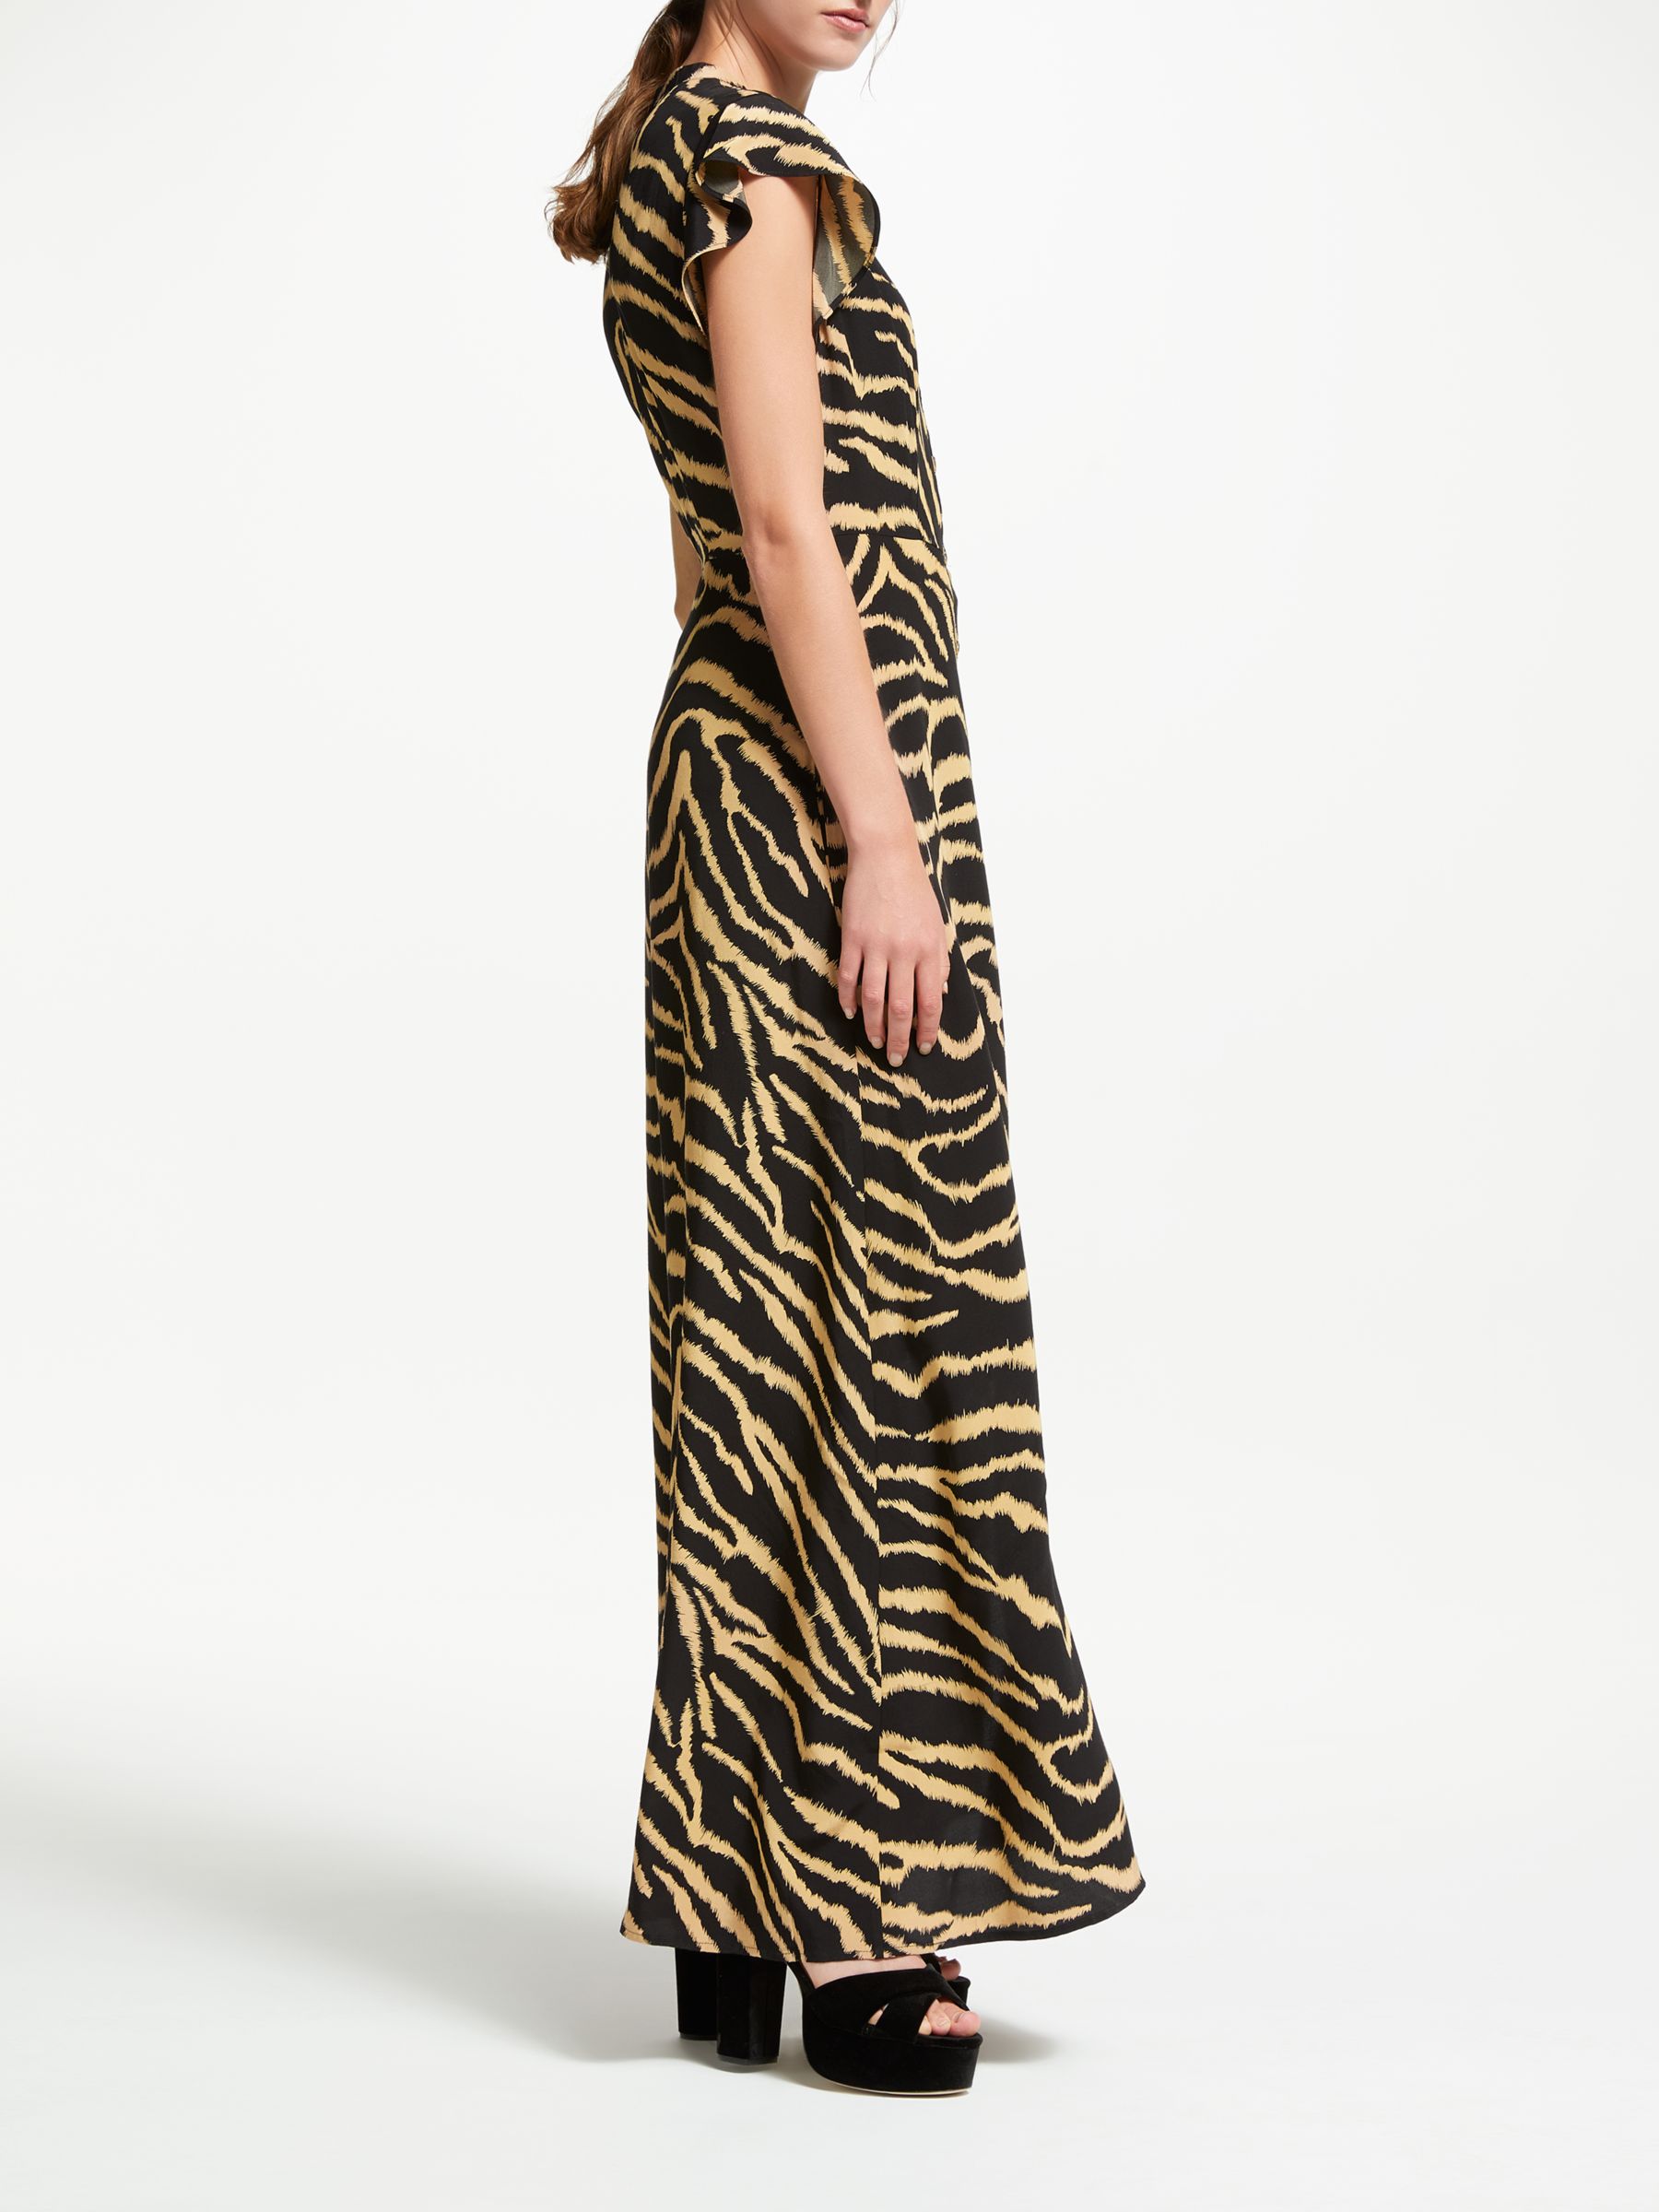 Somerset by Alice Temperley Zebra Cap Sleeve Maxi Dress, Black/Multi